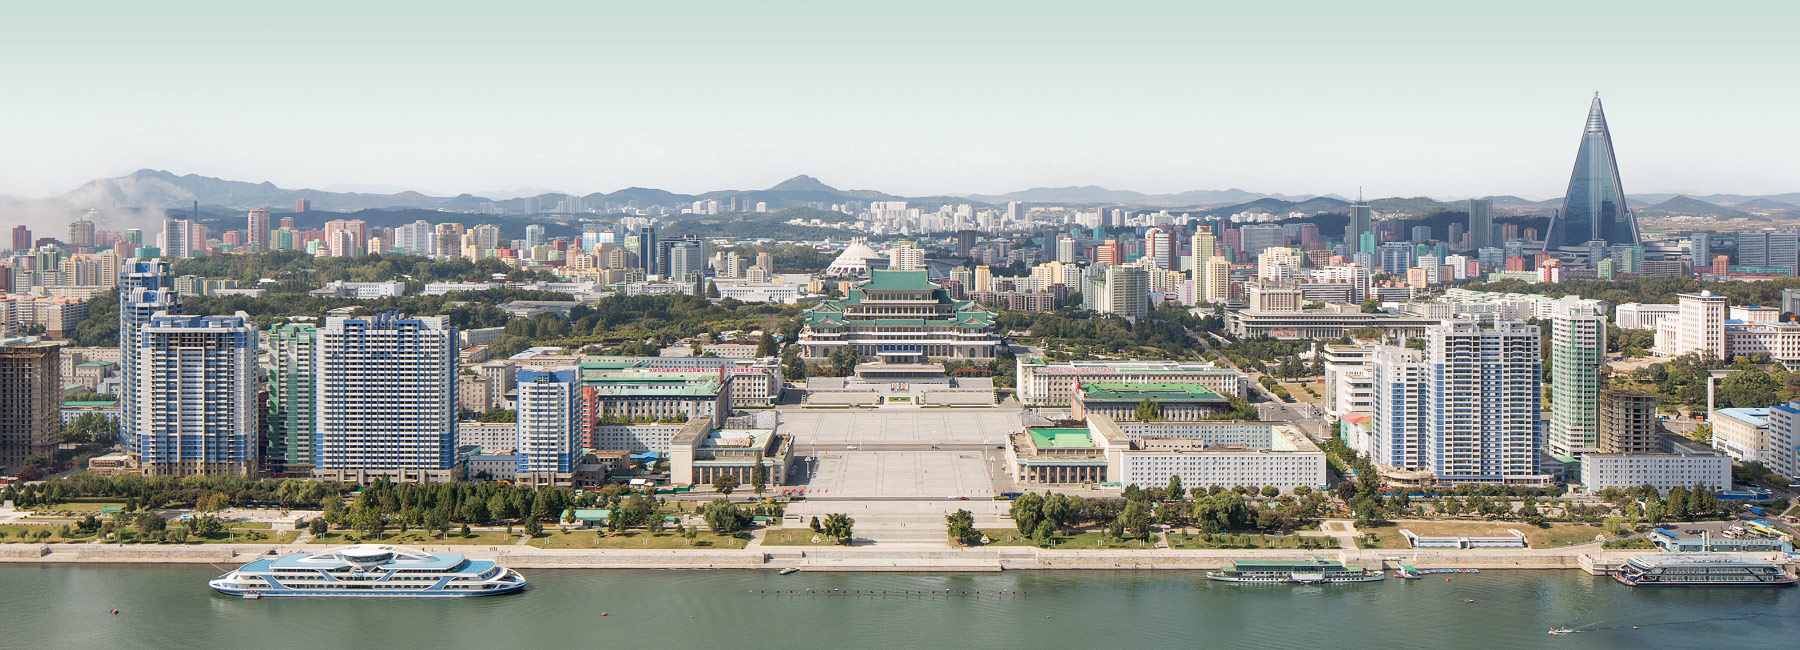 cristiano bianchi and kristina drapić document pyongyang, north korea's 'model city'